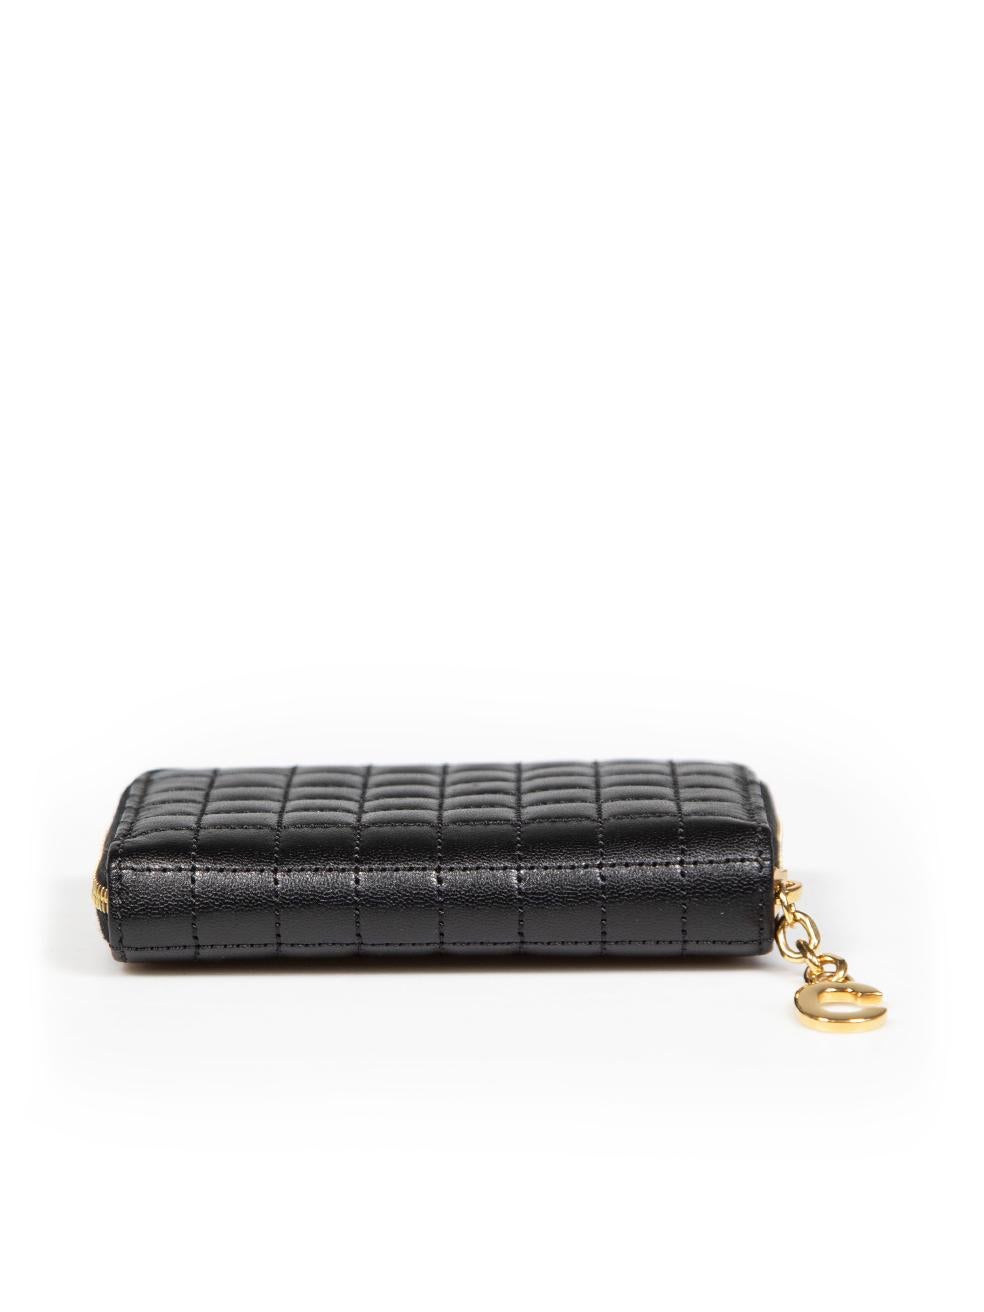 Women's Céline Black Leather C Charm Quilted Wallet For Sale